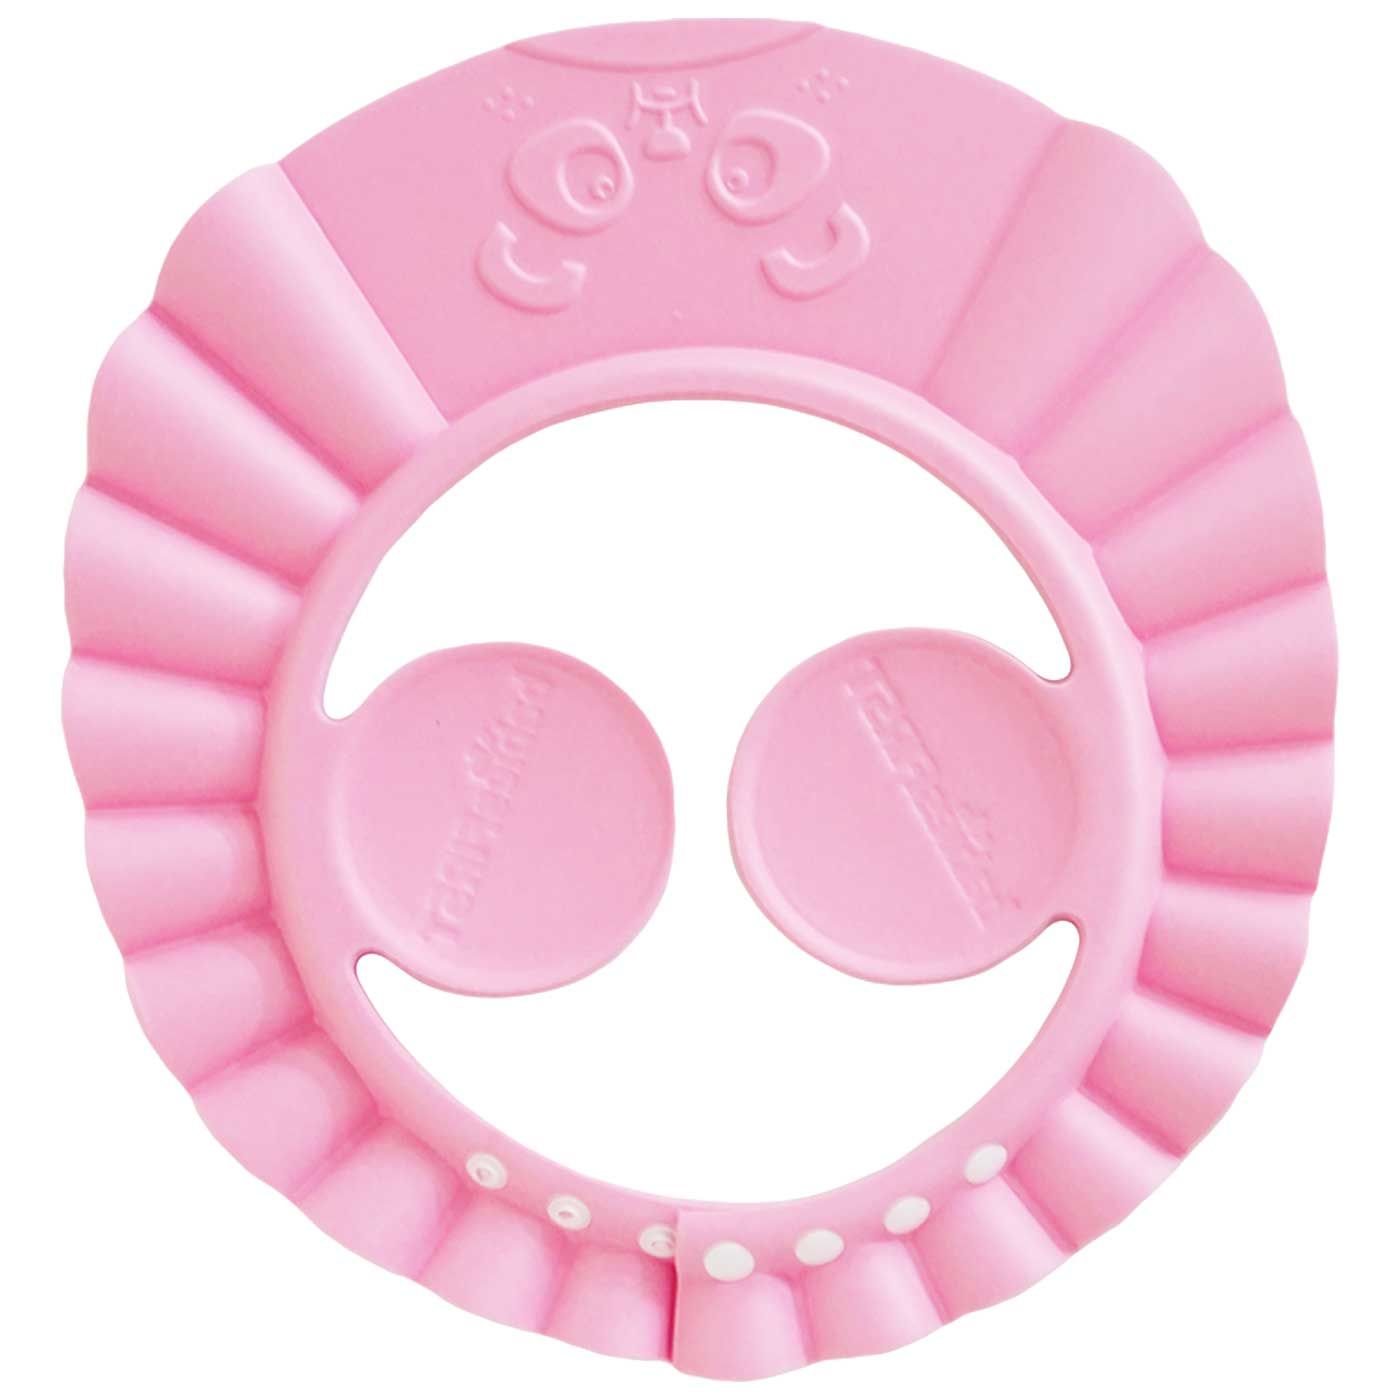 Babiesfirst Baby Shampoo Cap Pink - 3